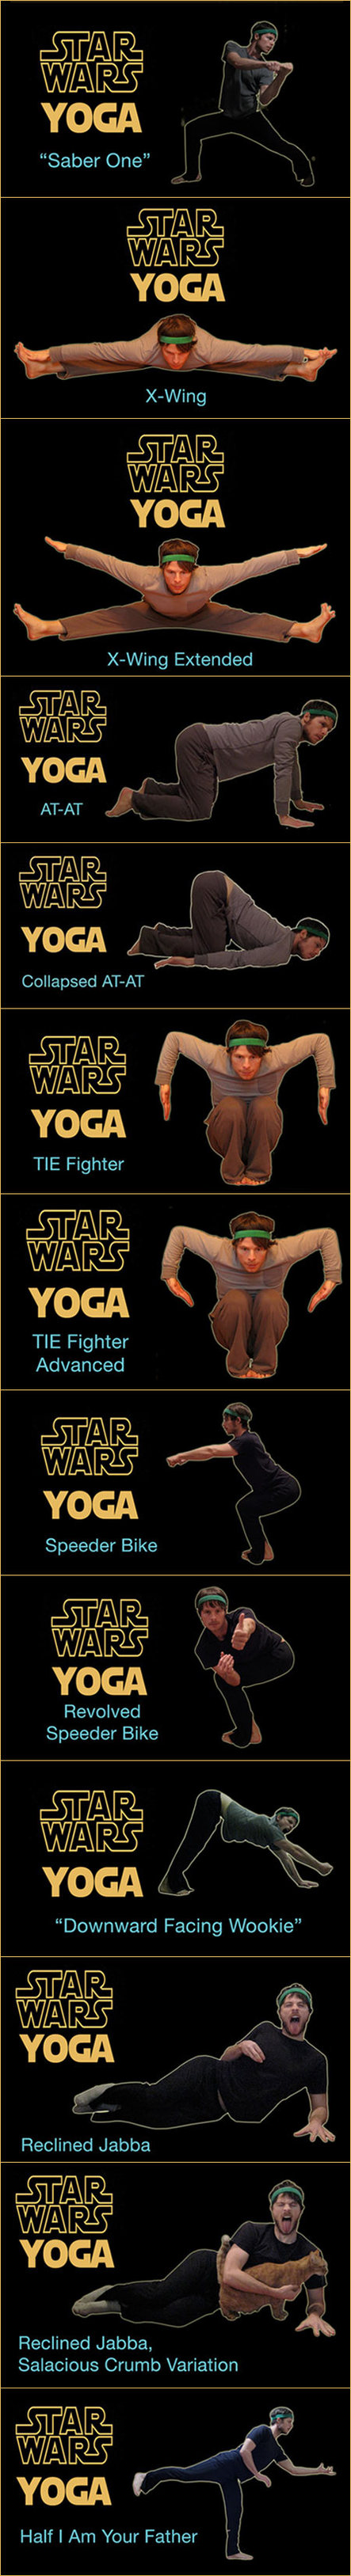 star wars yoga